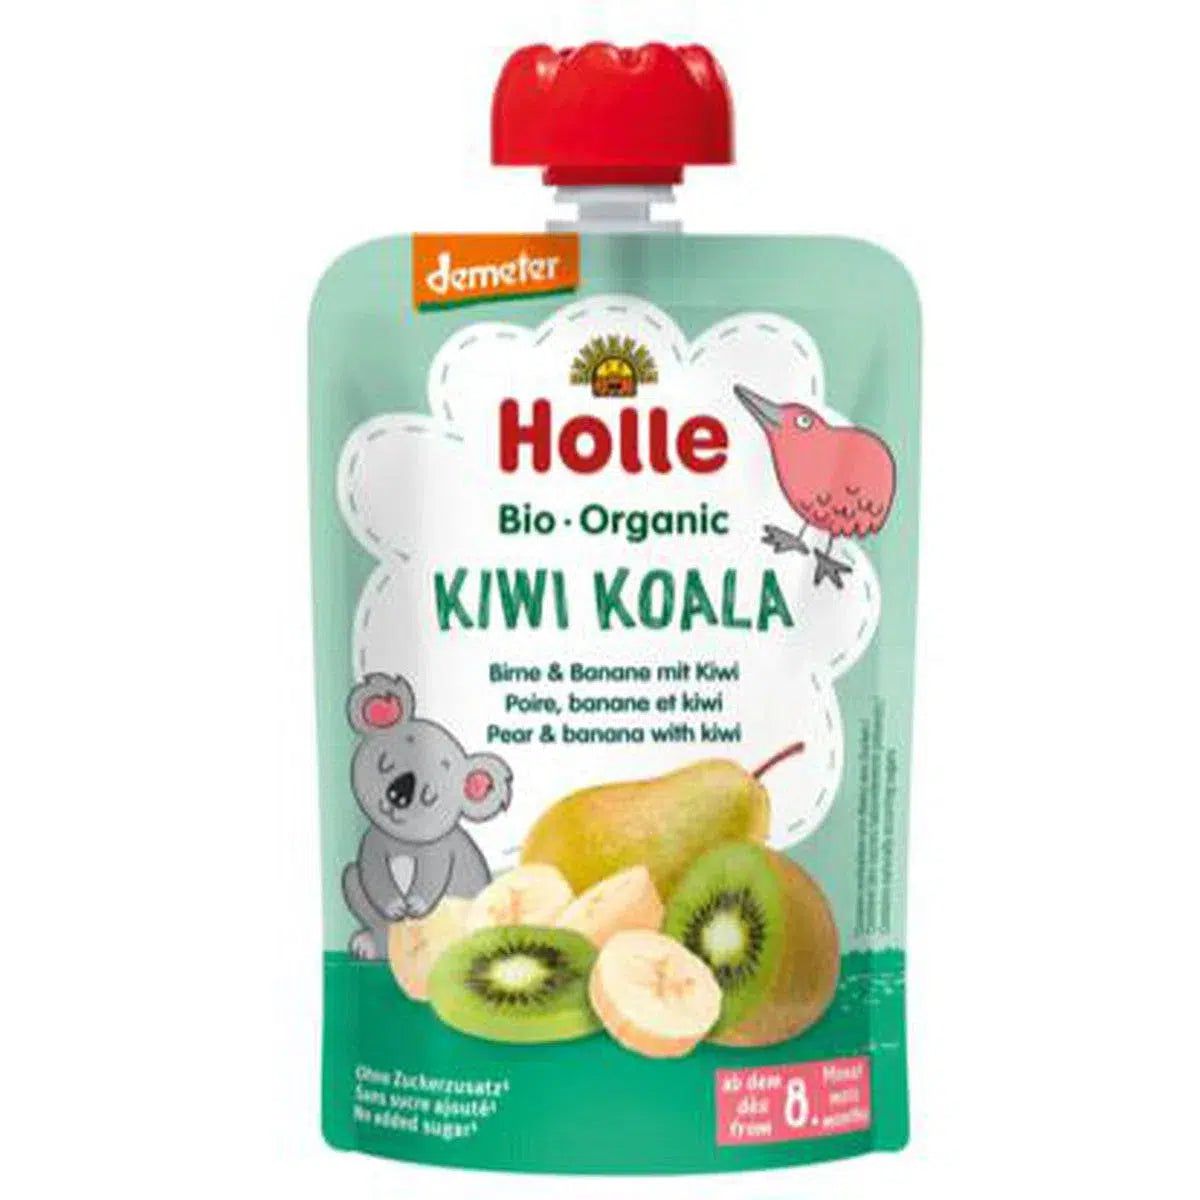 Kiwi Koala - Pear & Banana with Kiwi (100g), from 8 months